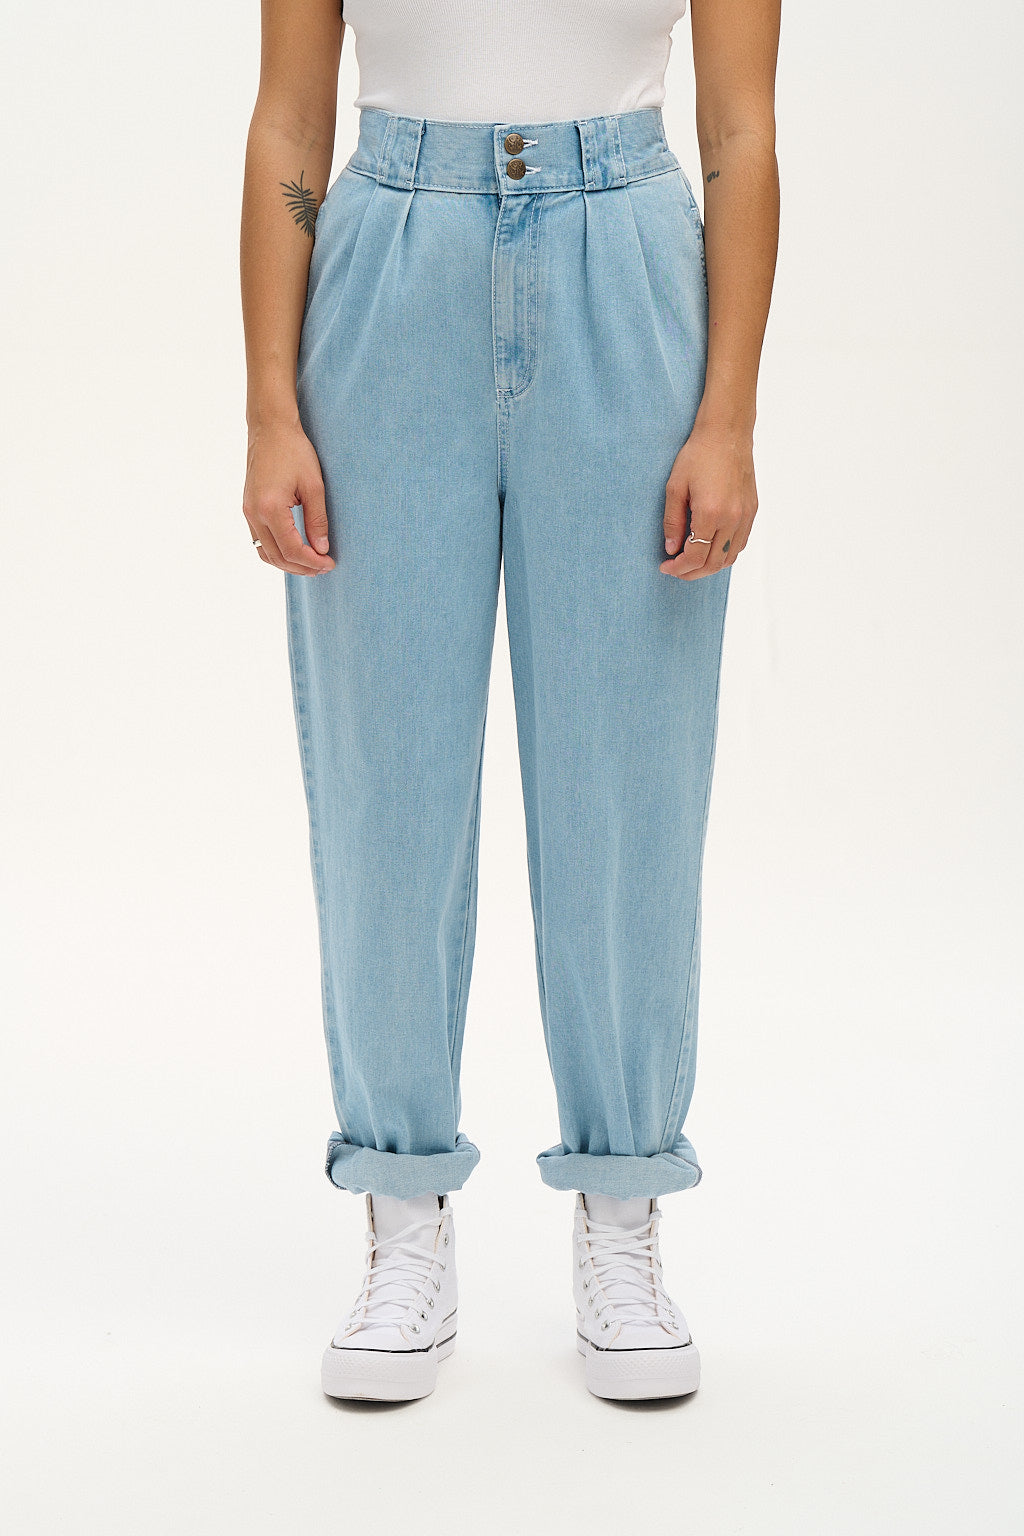 Addison Tapered Jeans: ORGANIC DENIM - Light Wash Blue